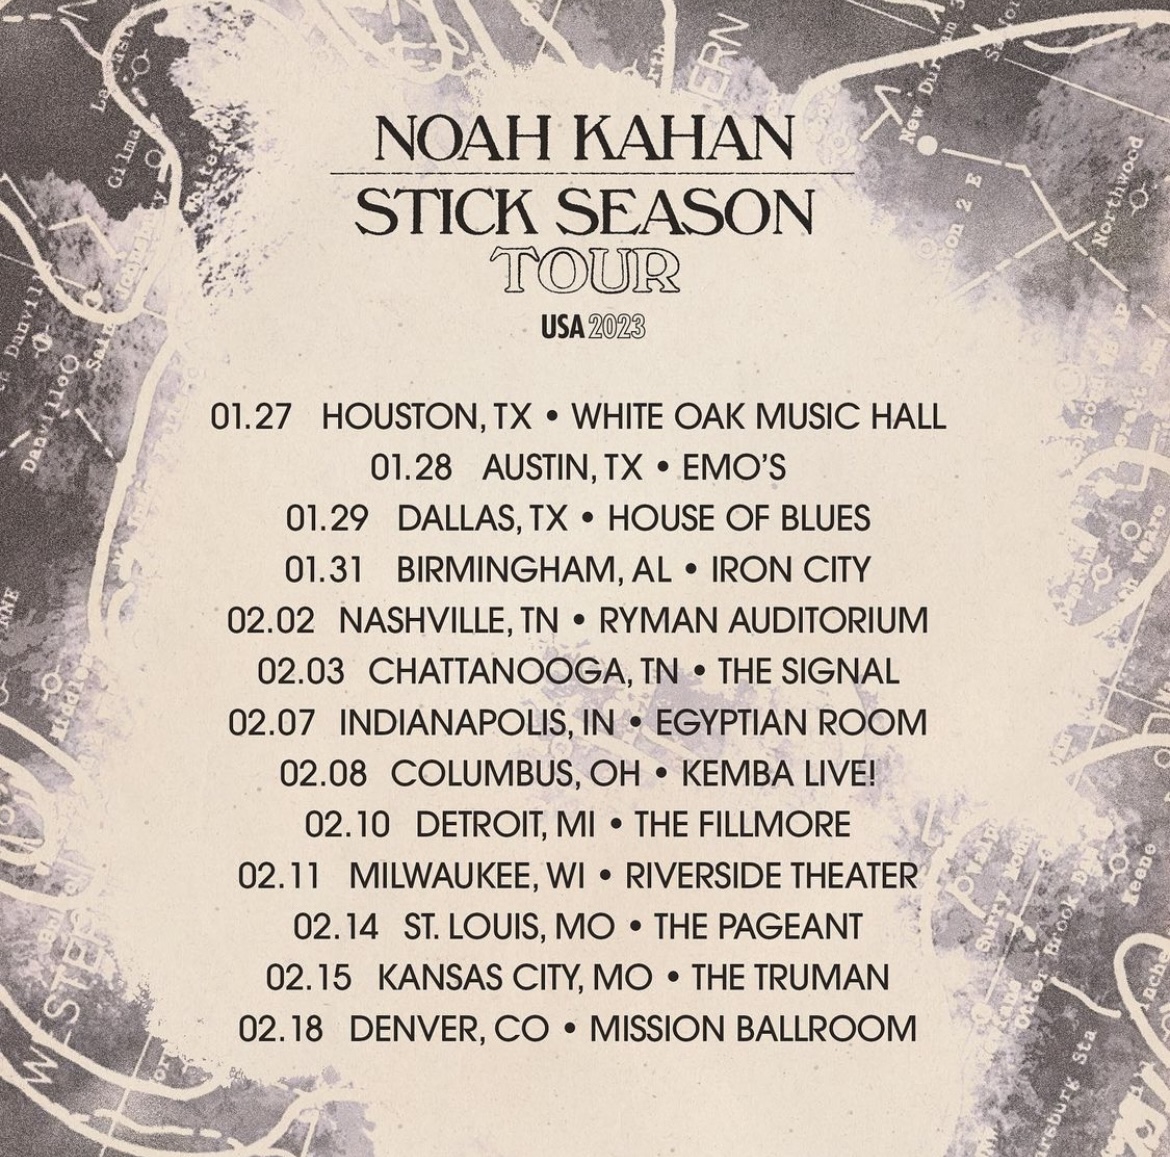 Noah Kahan shares new song “Northern Attitude” and announces album